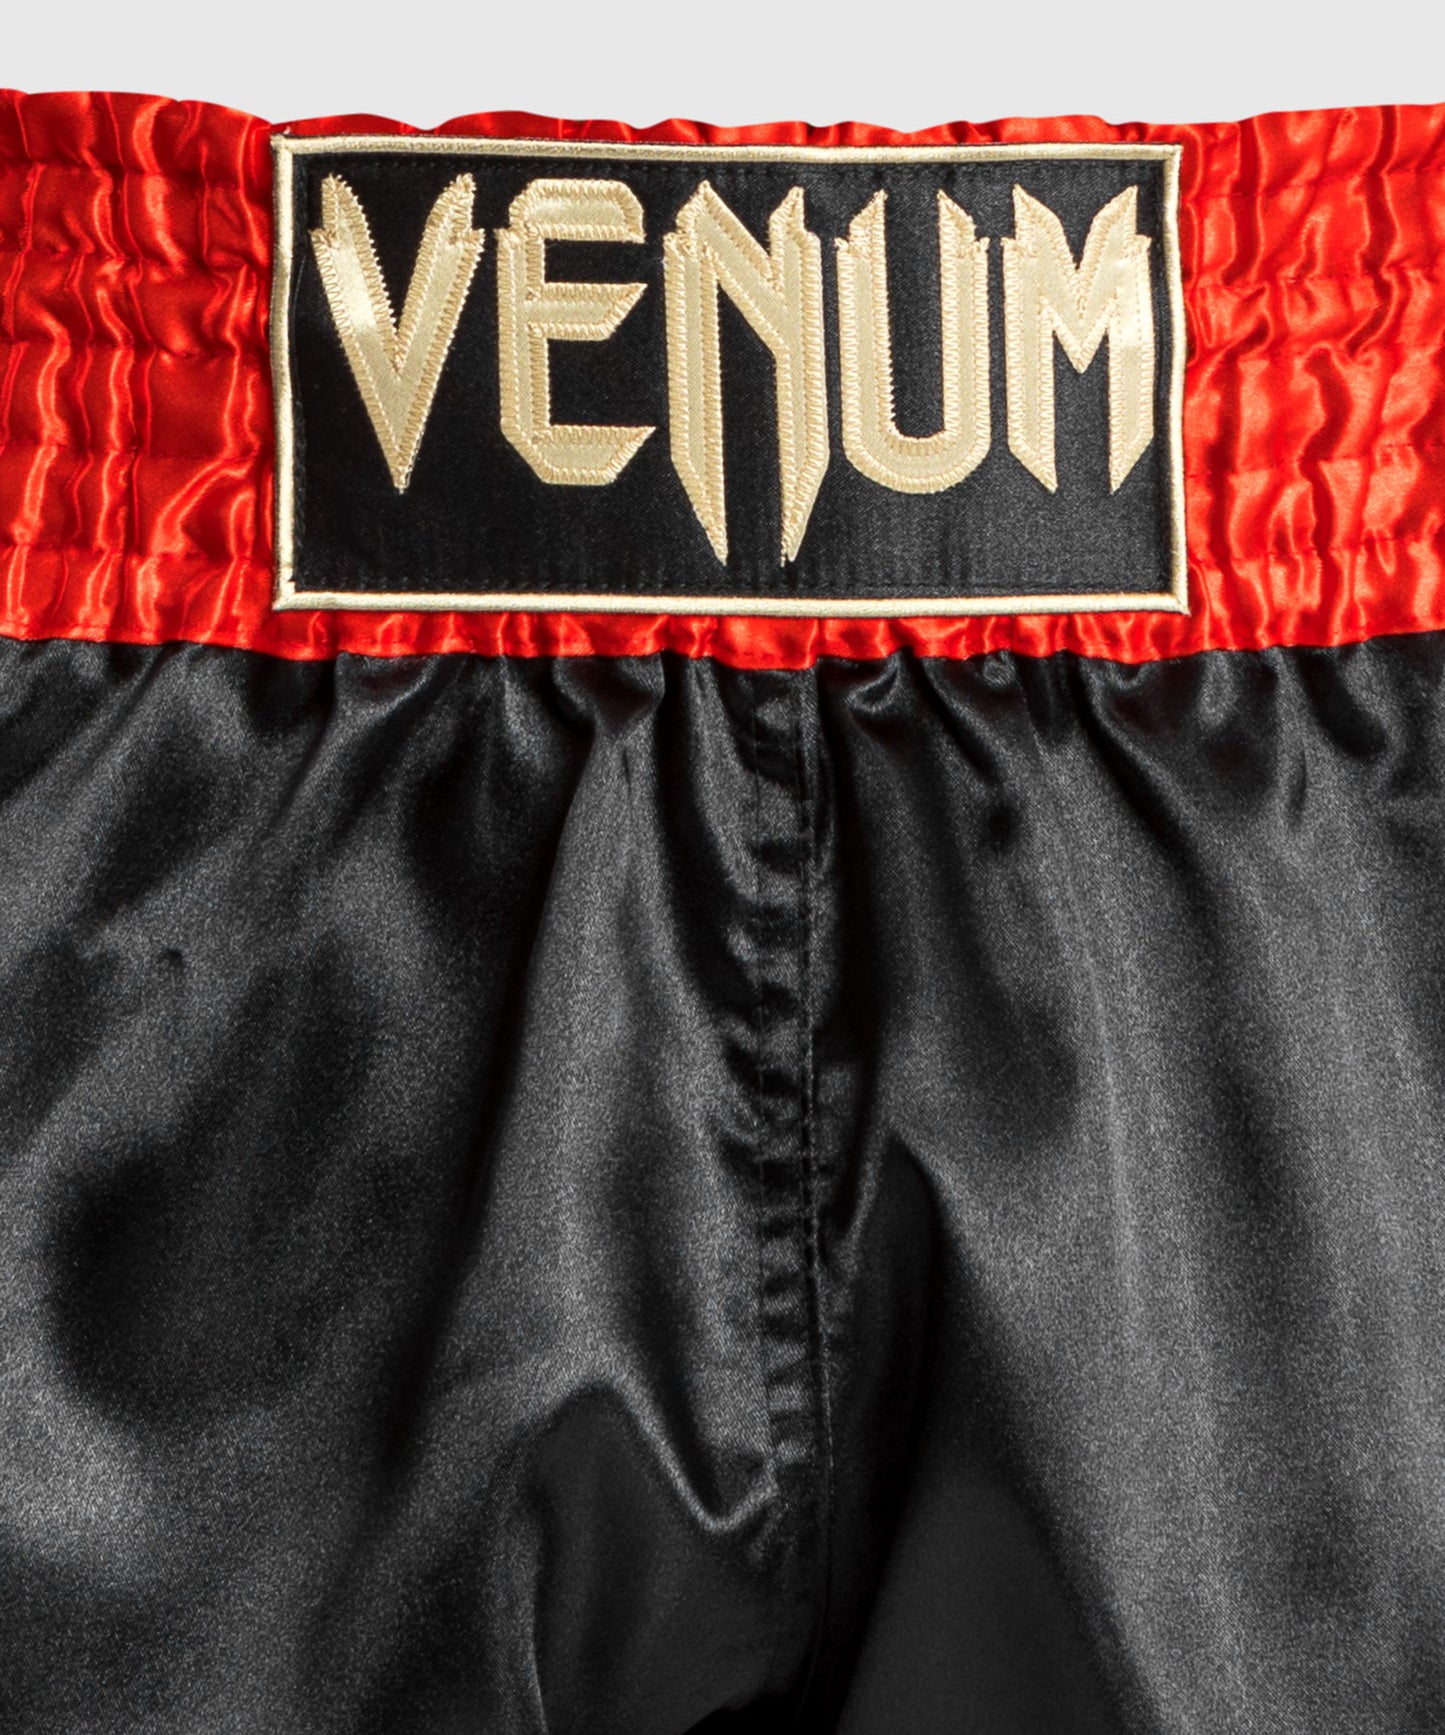 Venum Classic Muay Thai Kort Rood/Zwart/Goud